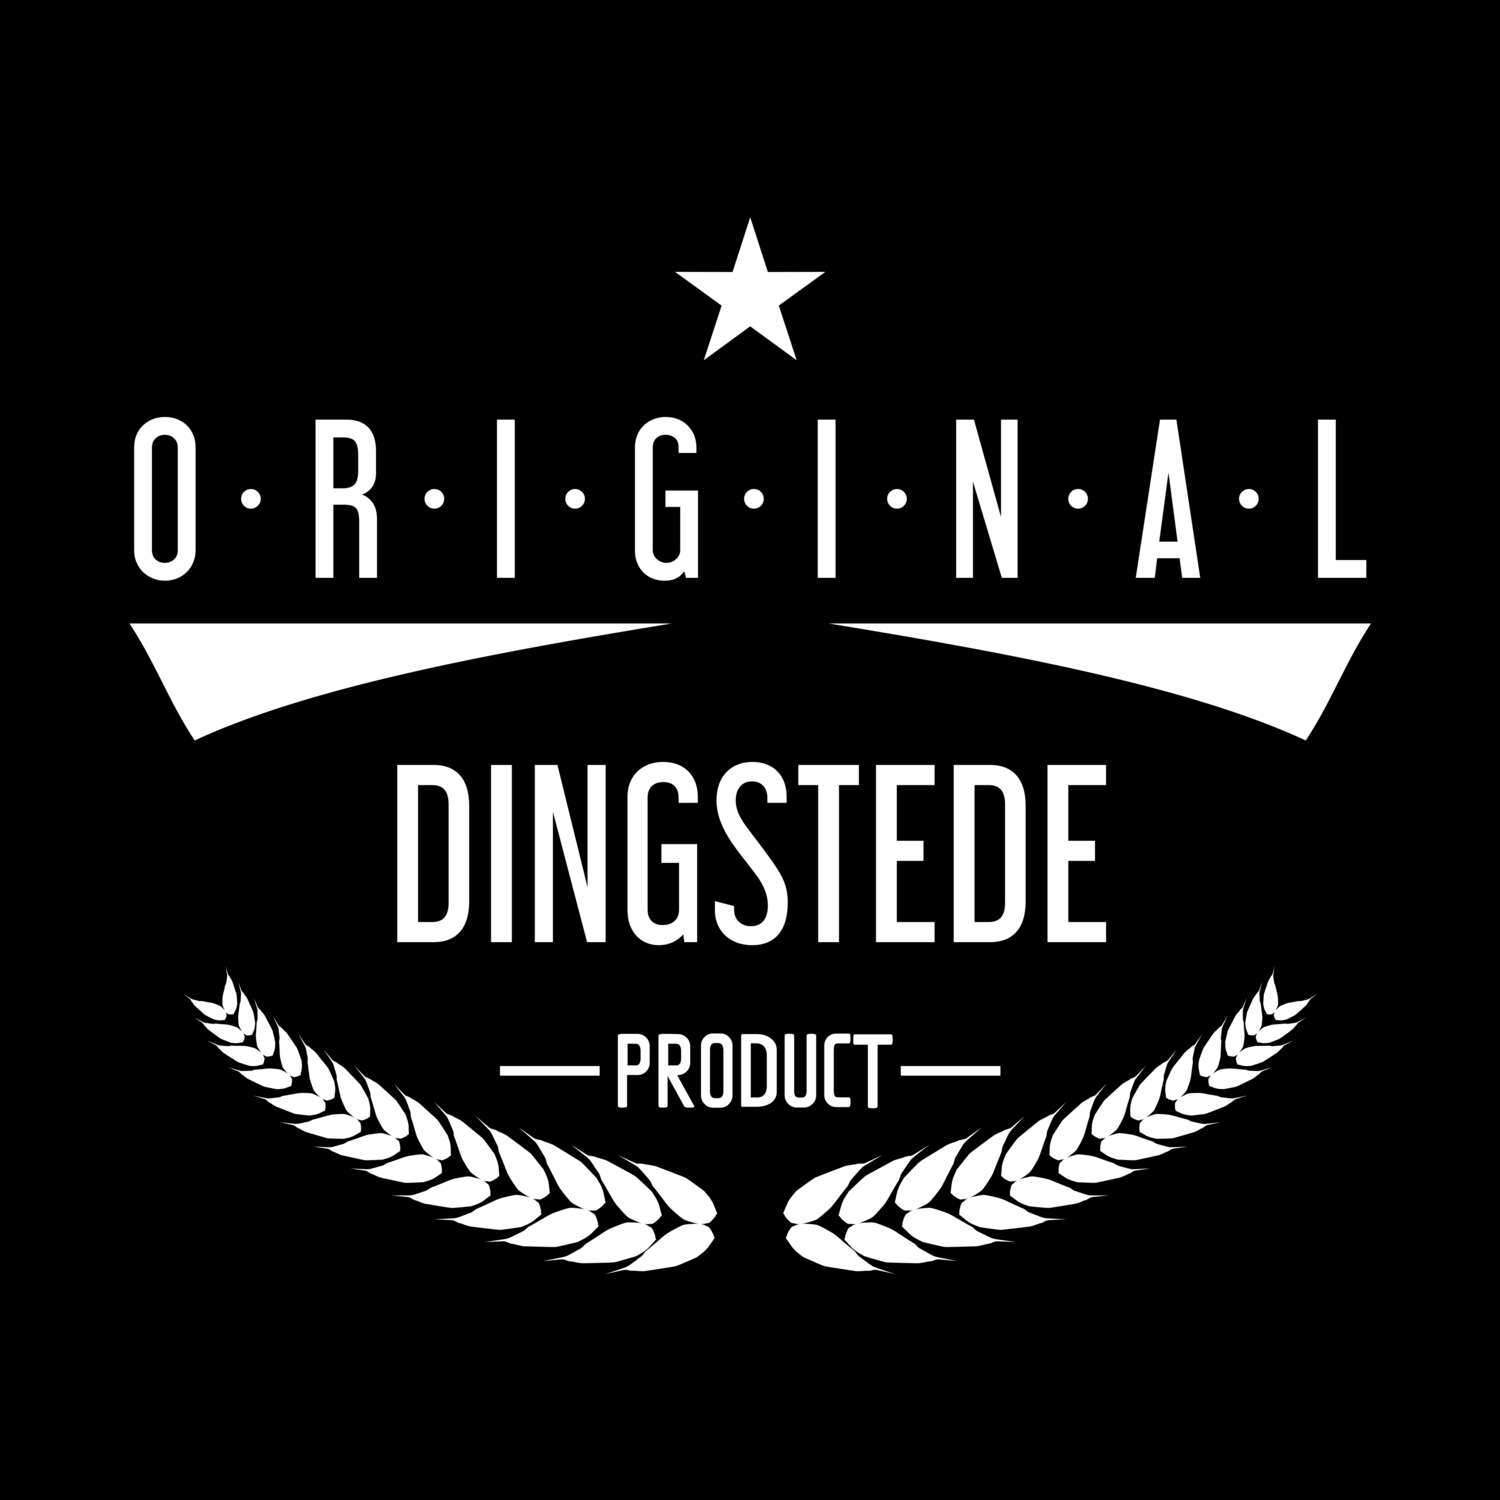 Dingstede T-Shirt »Original Product«